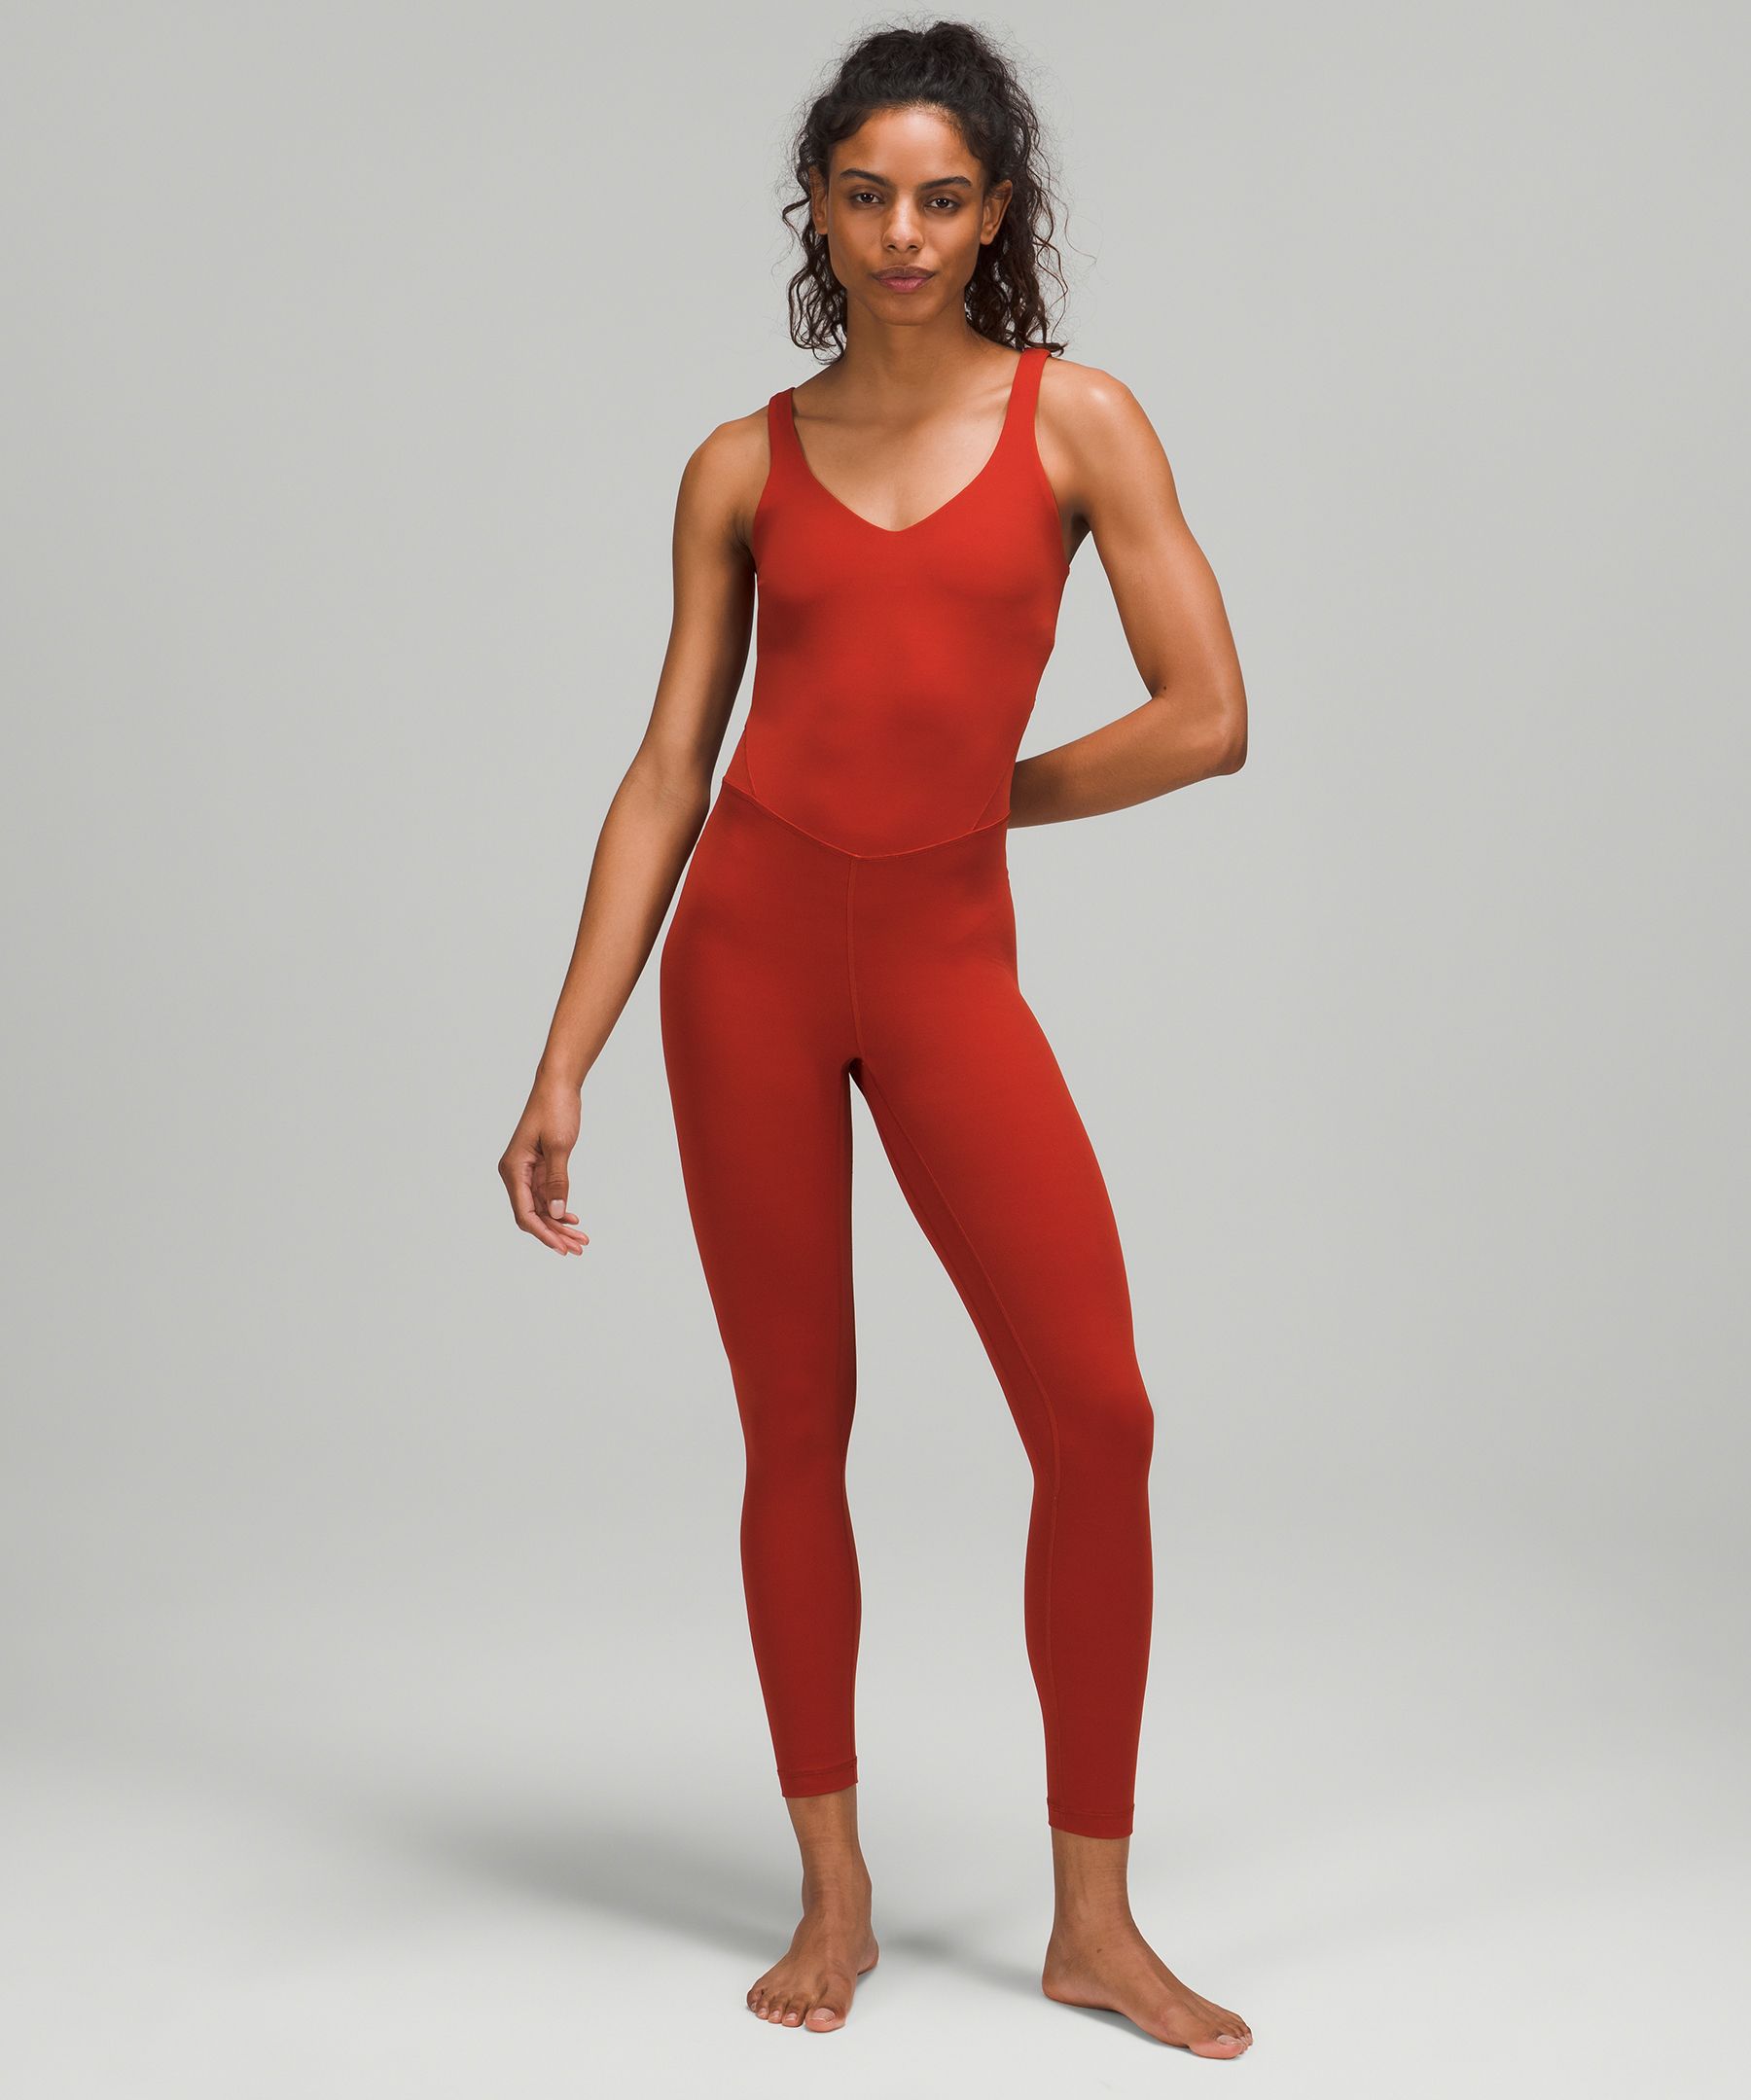 Lululemon Align Bodysuit - Athletic apparel